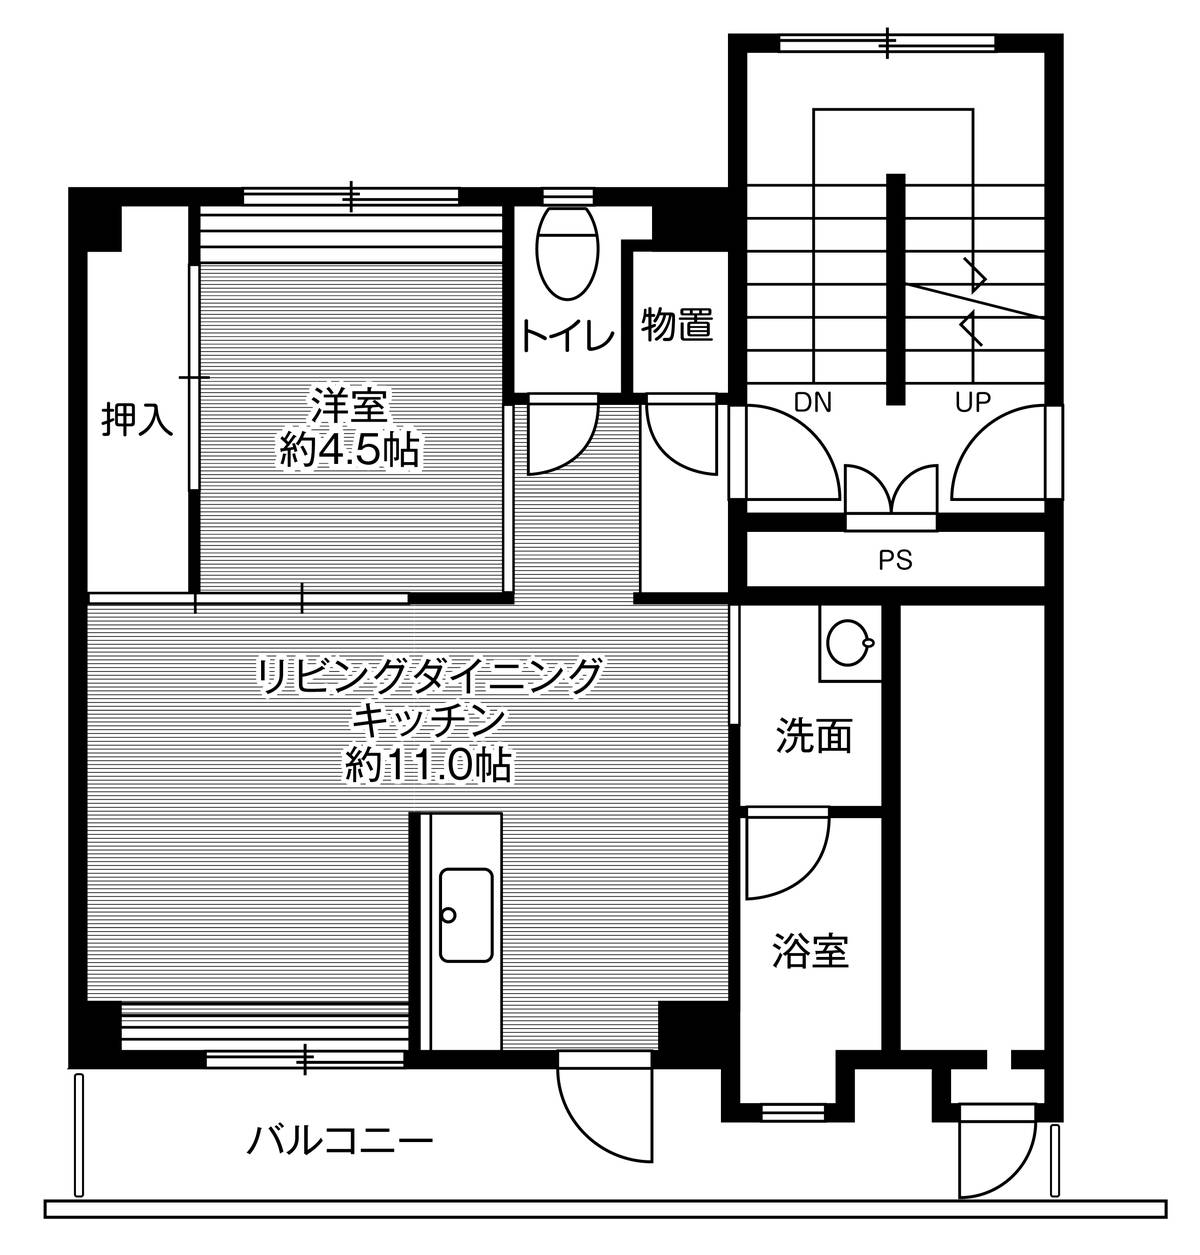 1LDK floorplan of Village House Koyama in Tottori-shi